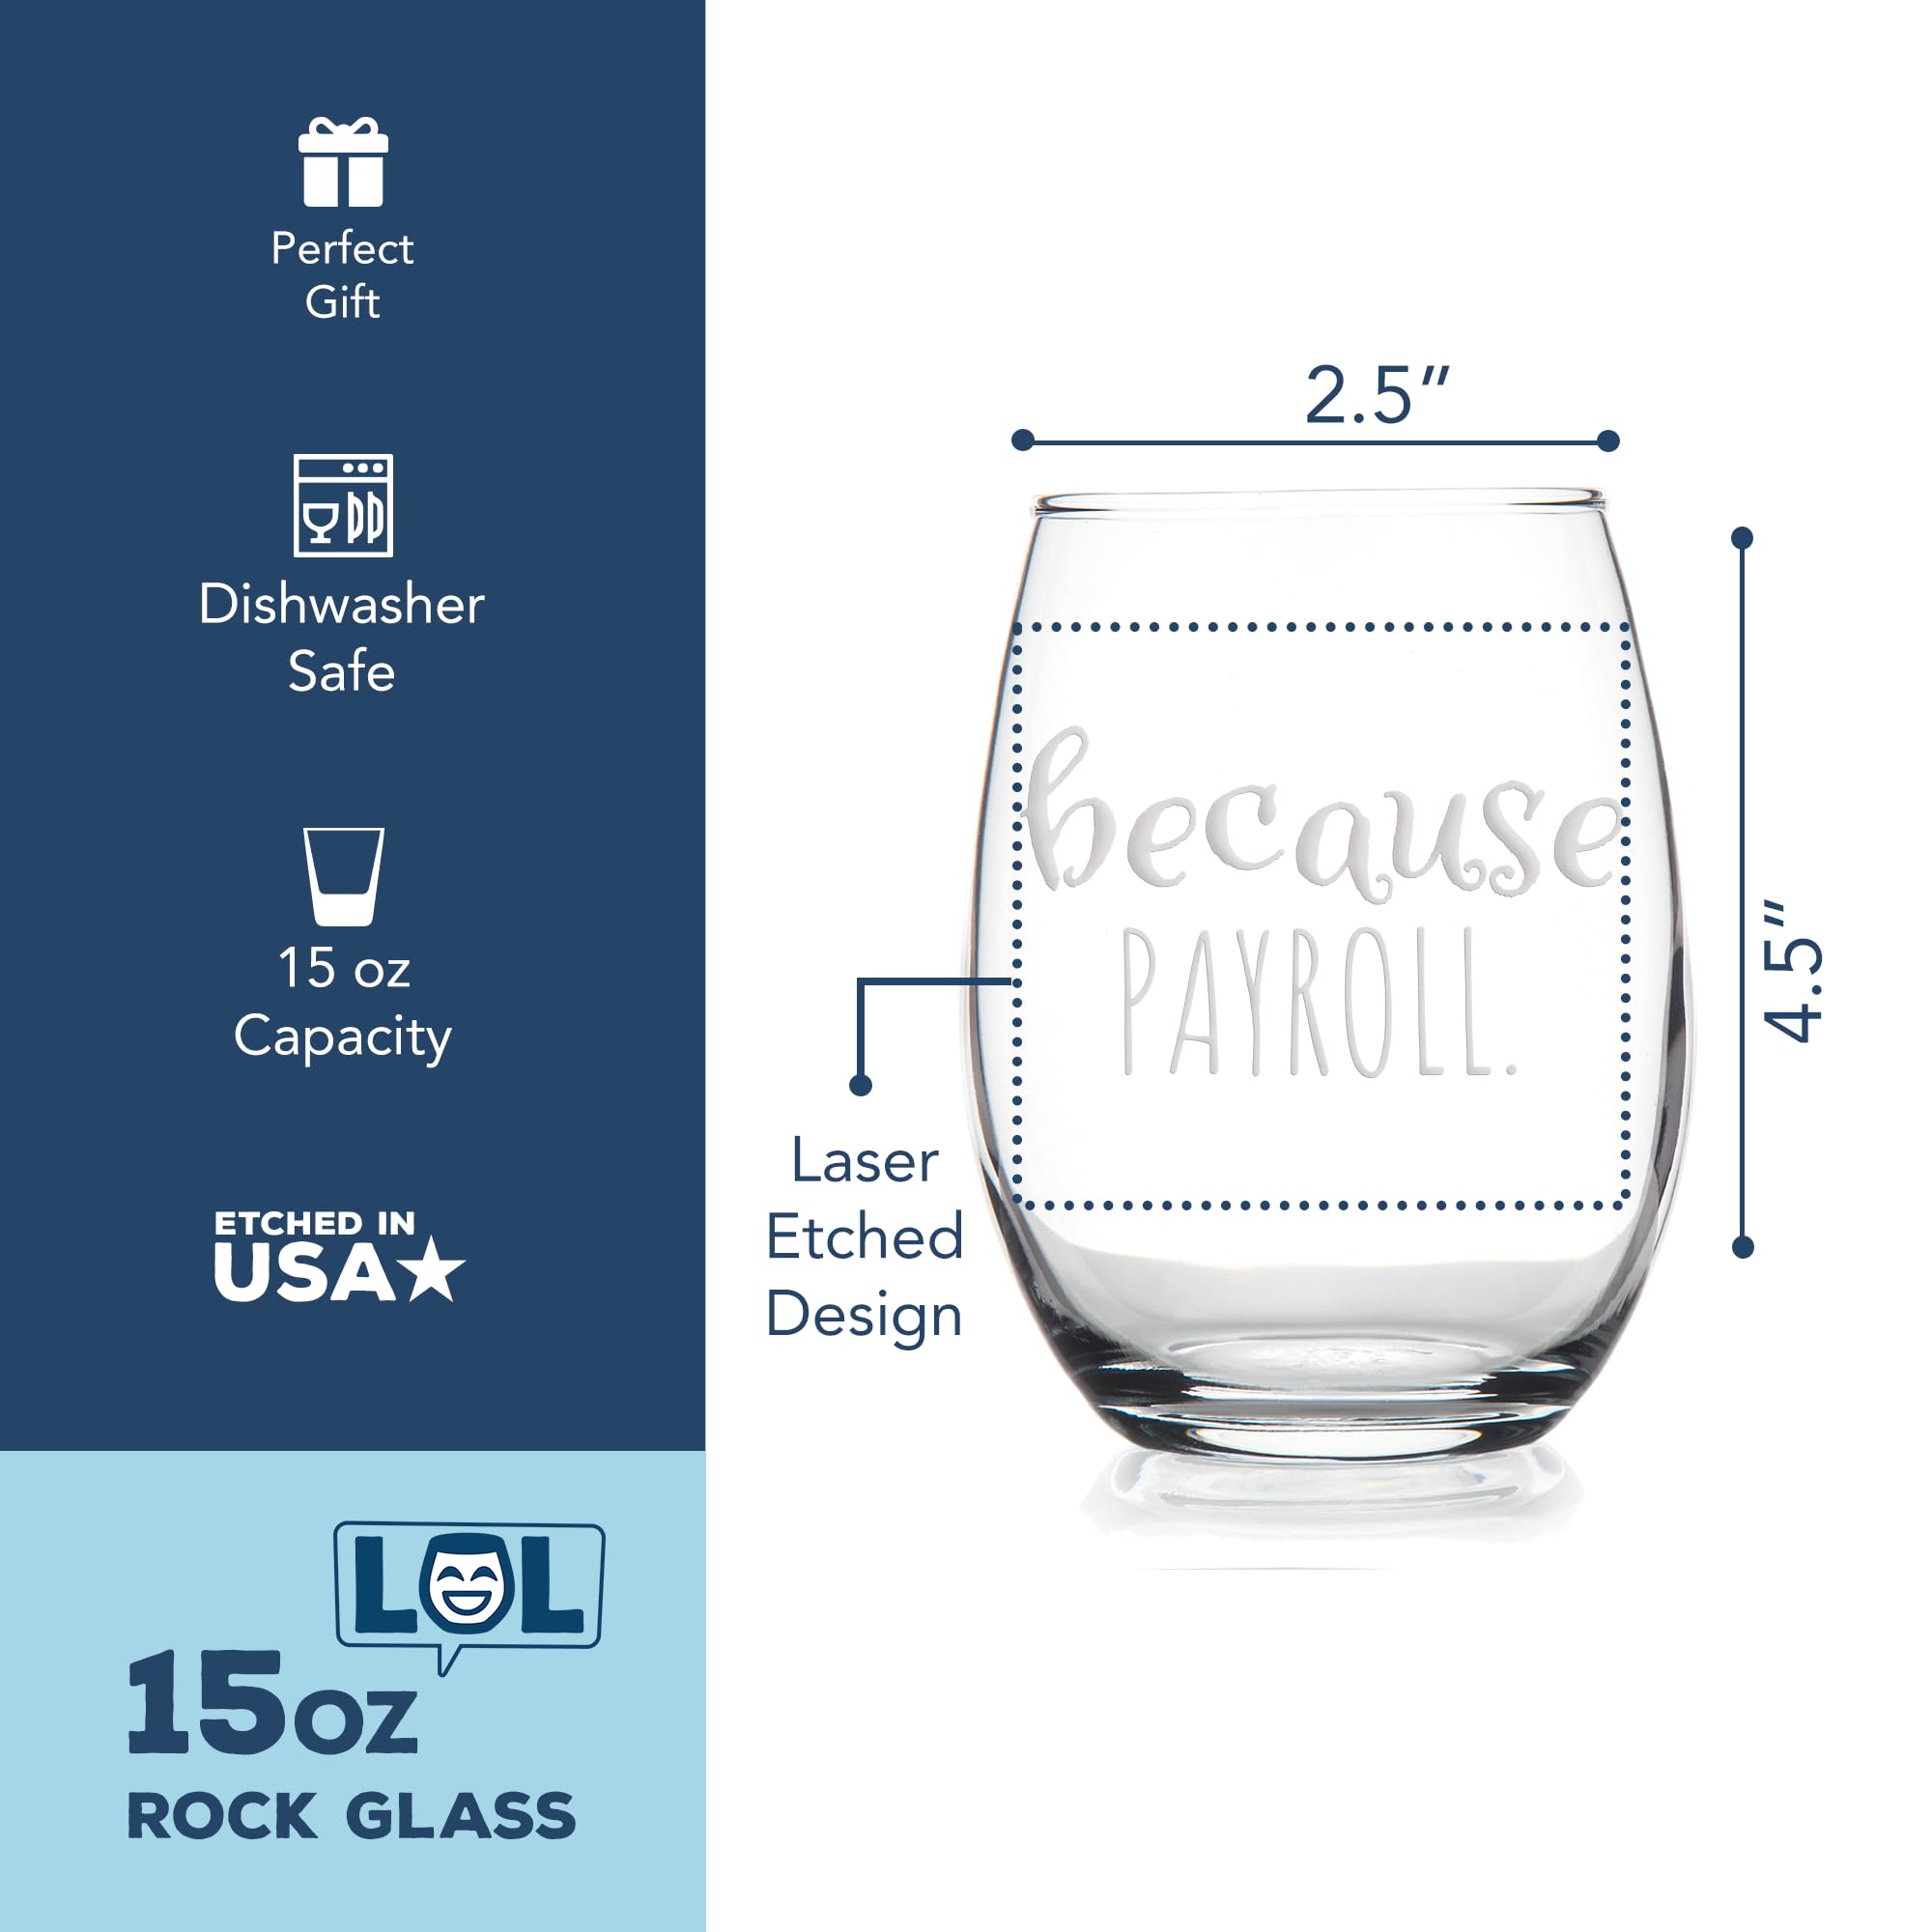 Because Payroll Stemless Wine Glass - Payroll Gift, Because Payroll, Accounting Gift, Accountant Gift